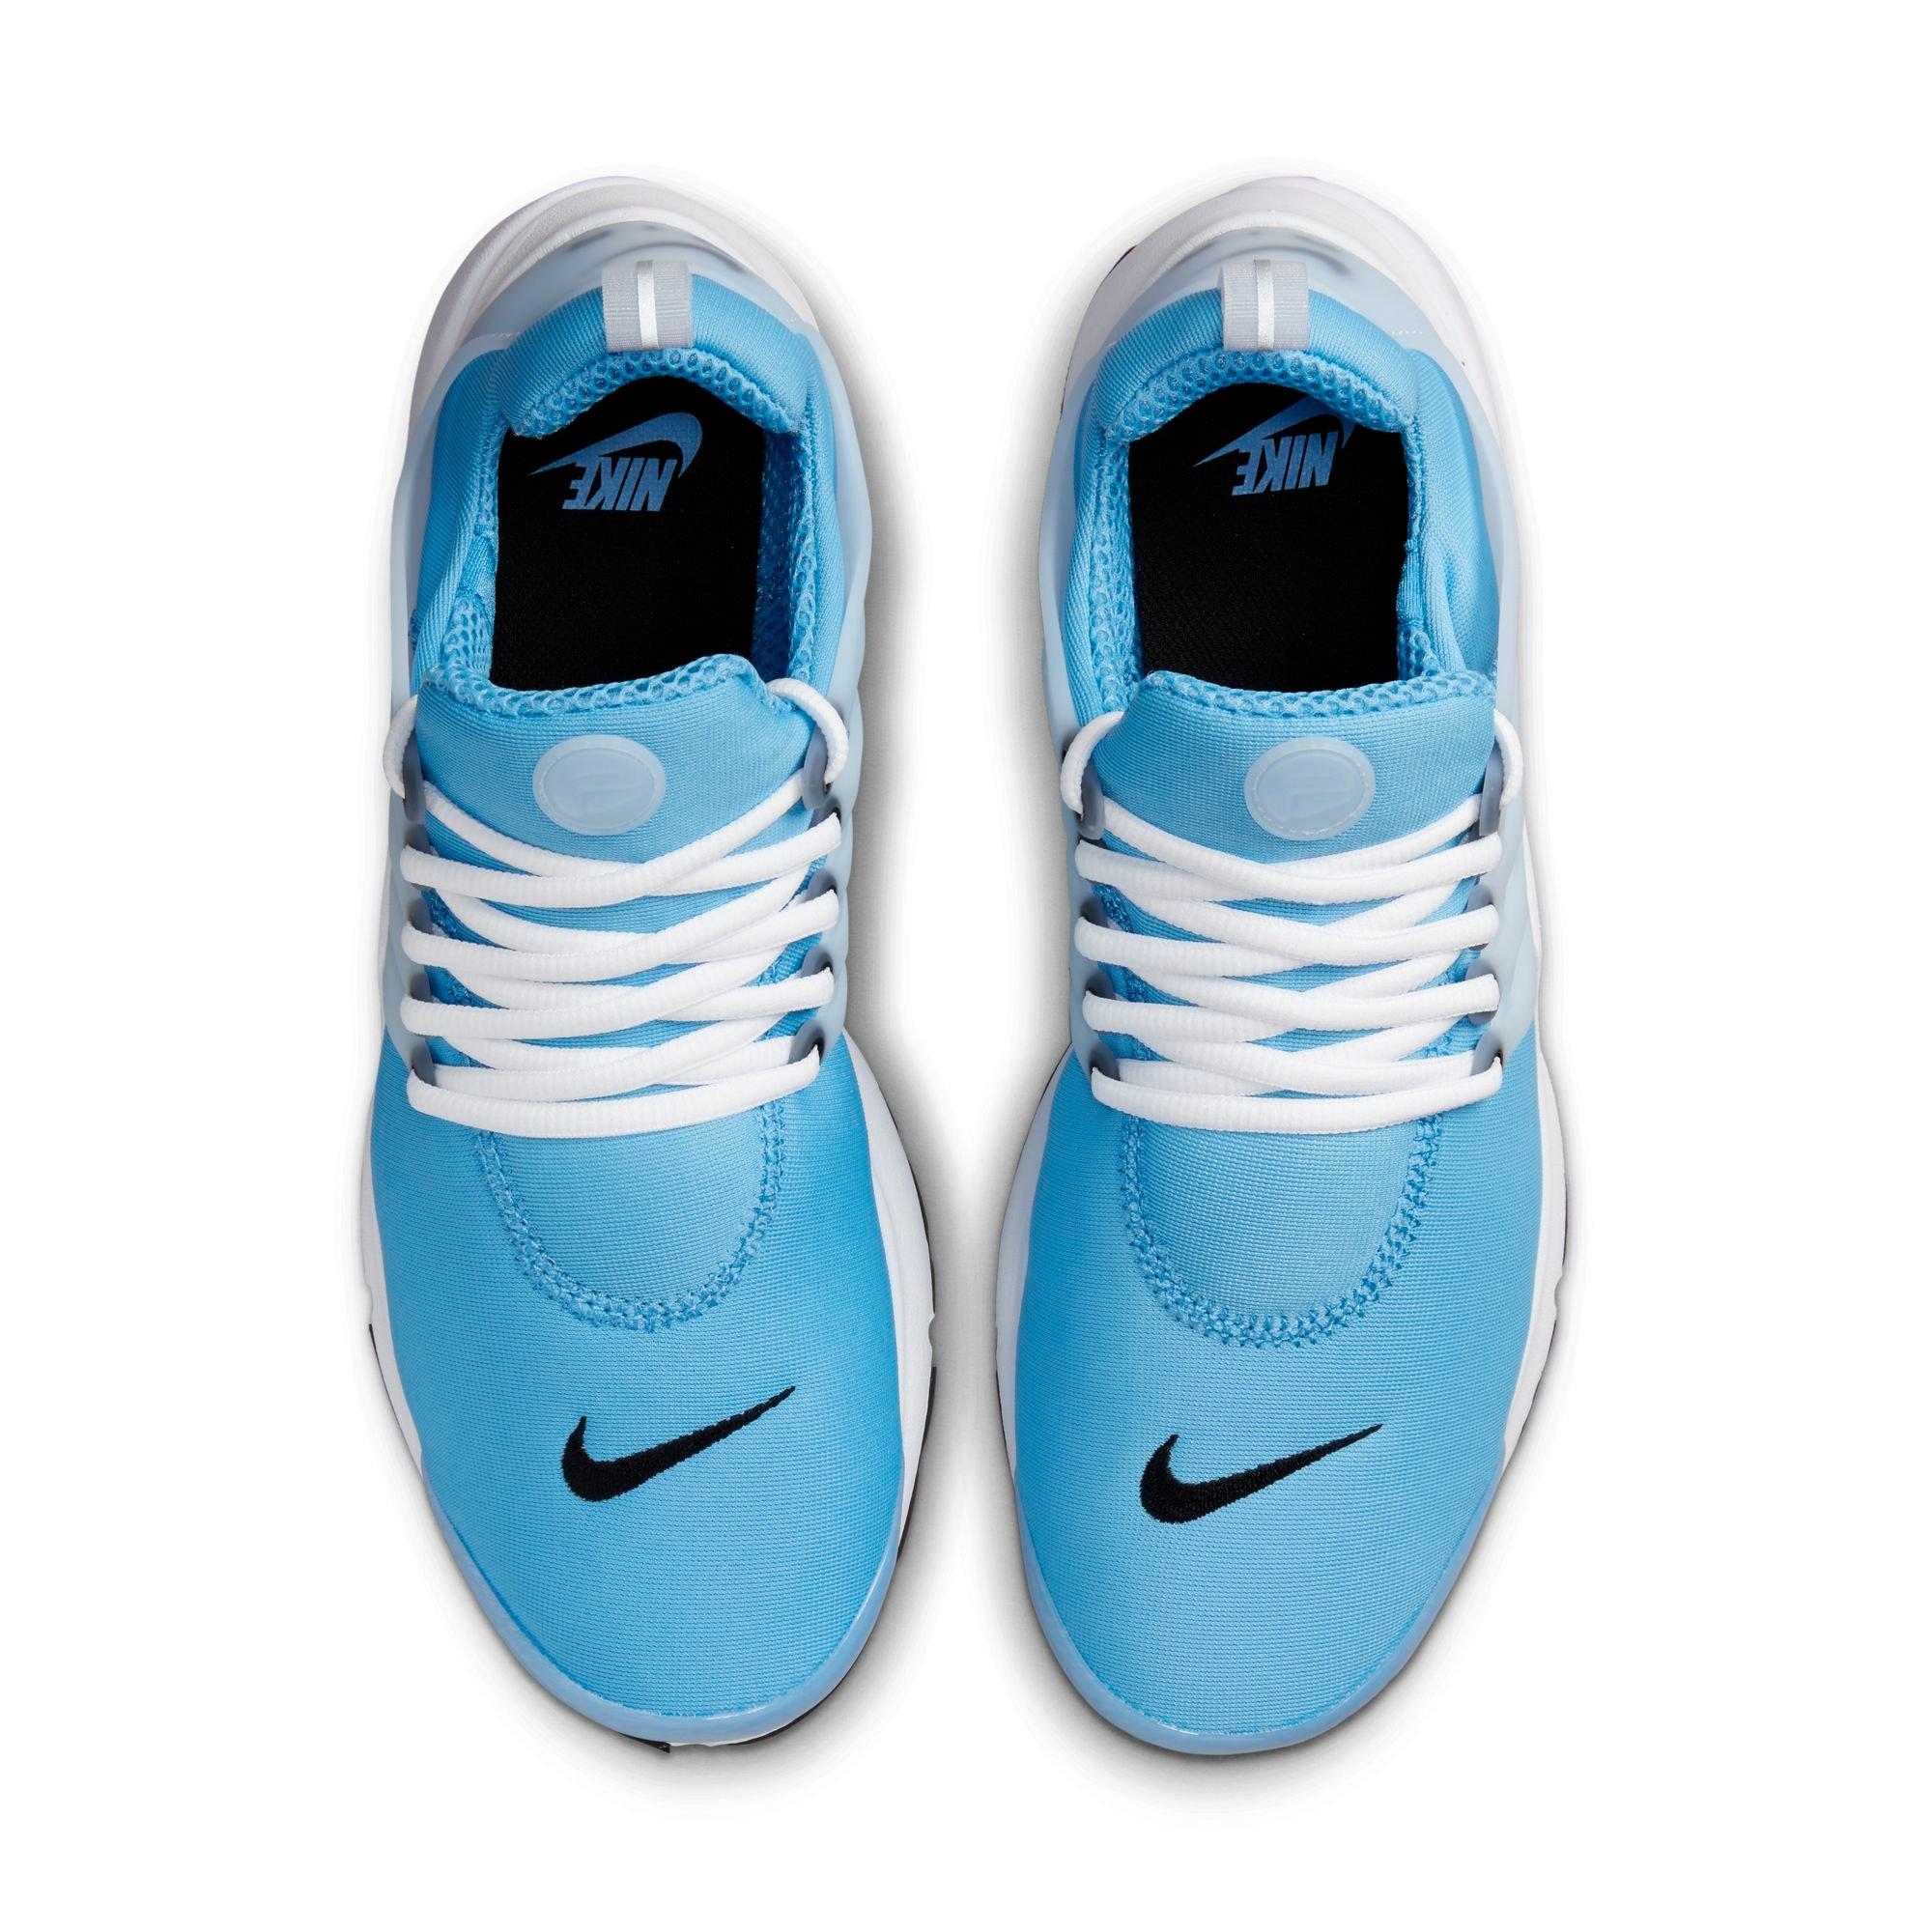 kanker klimaat Handel Nike Air Presto "University Blue/Black/White" Men's Shoe